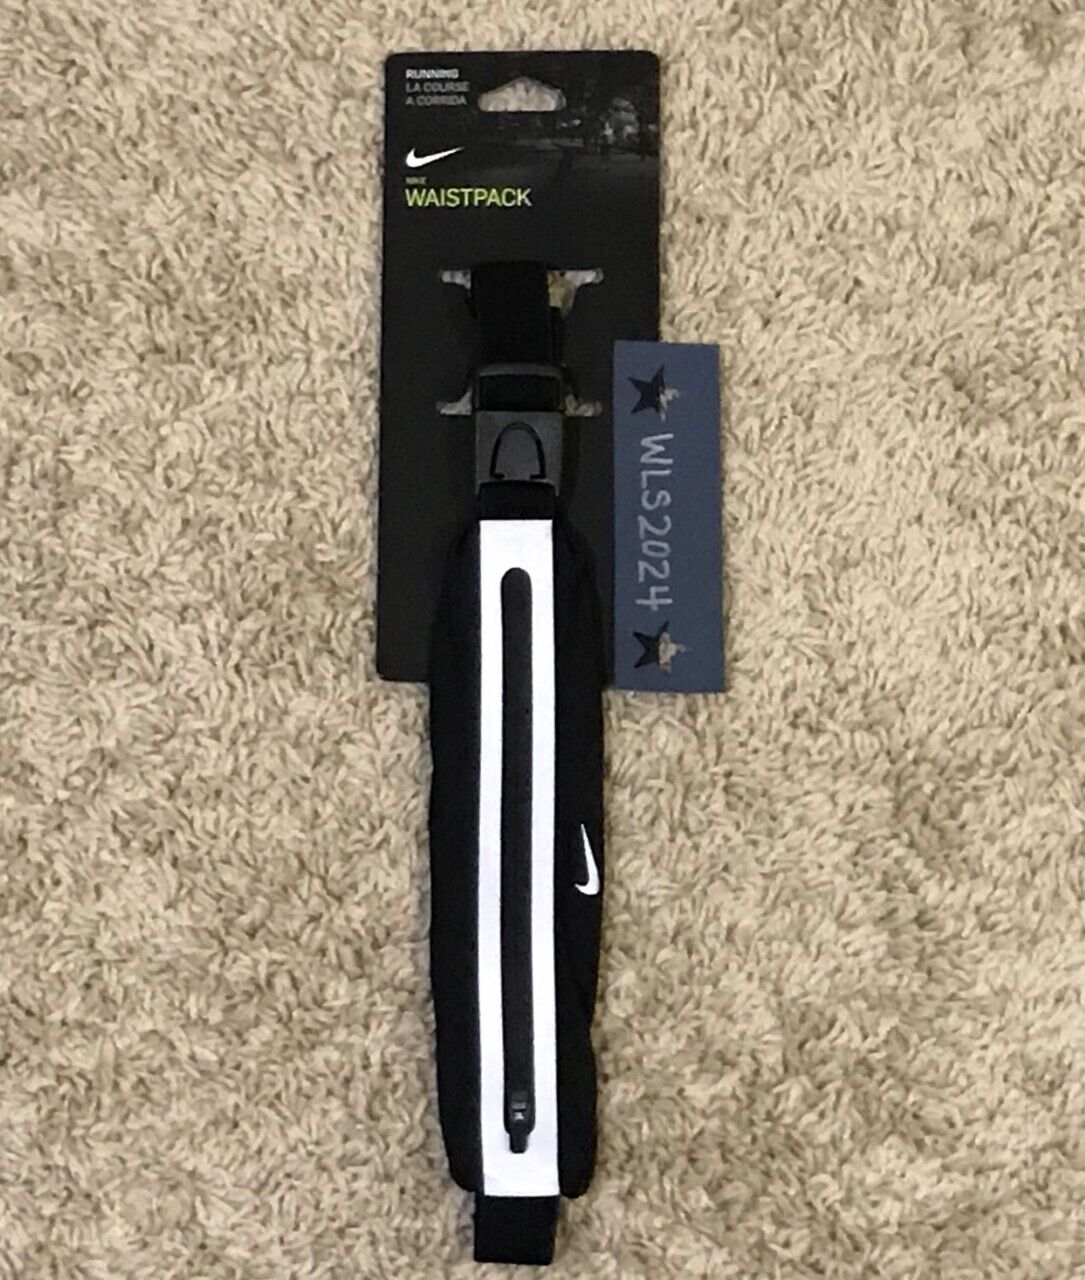 Nike Slim Running Waistpack-black/silver-unisex (adjustable) #nrla0082os